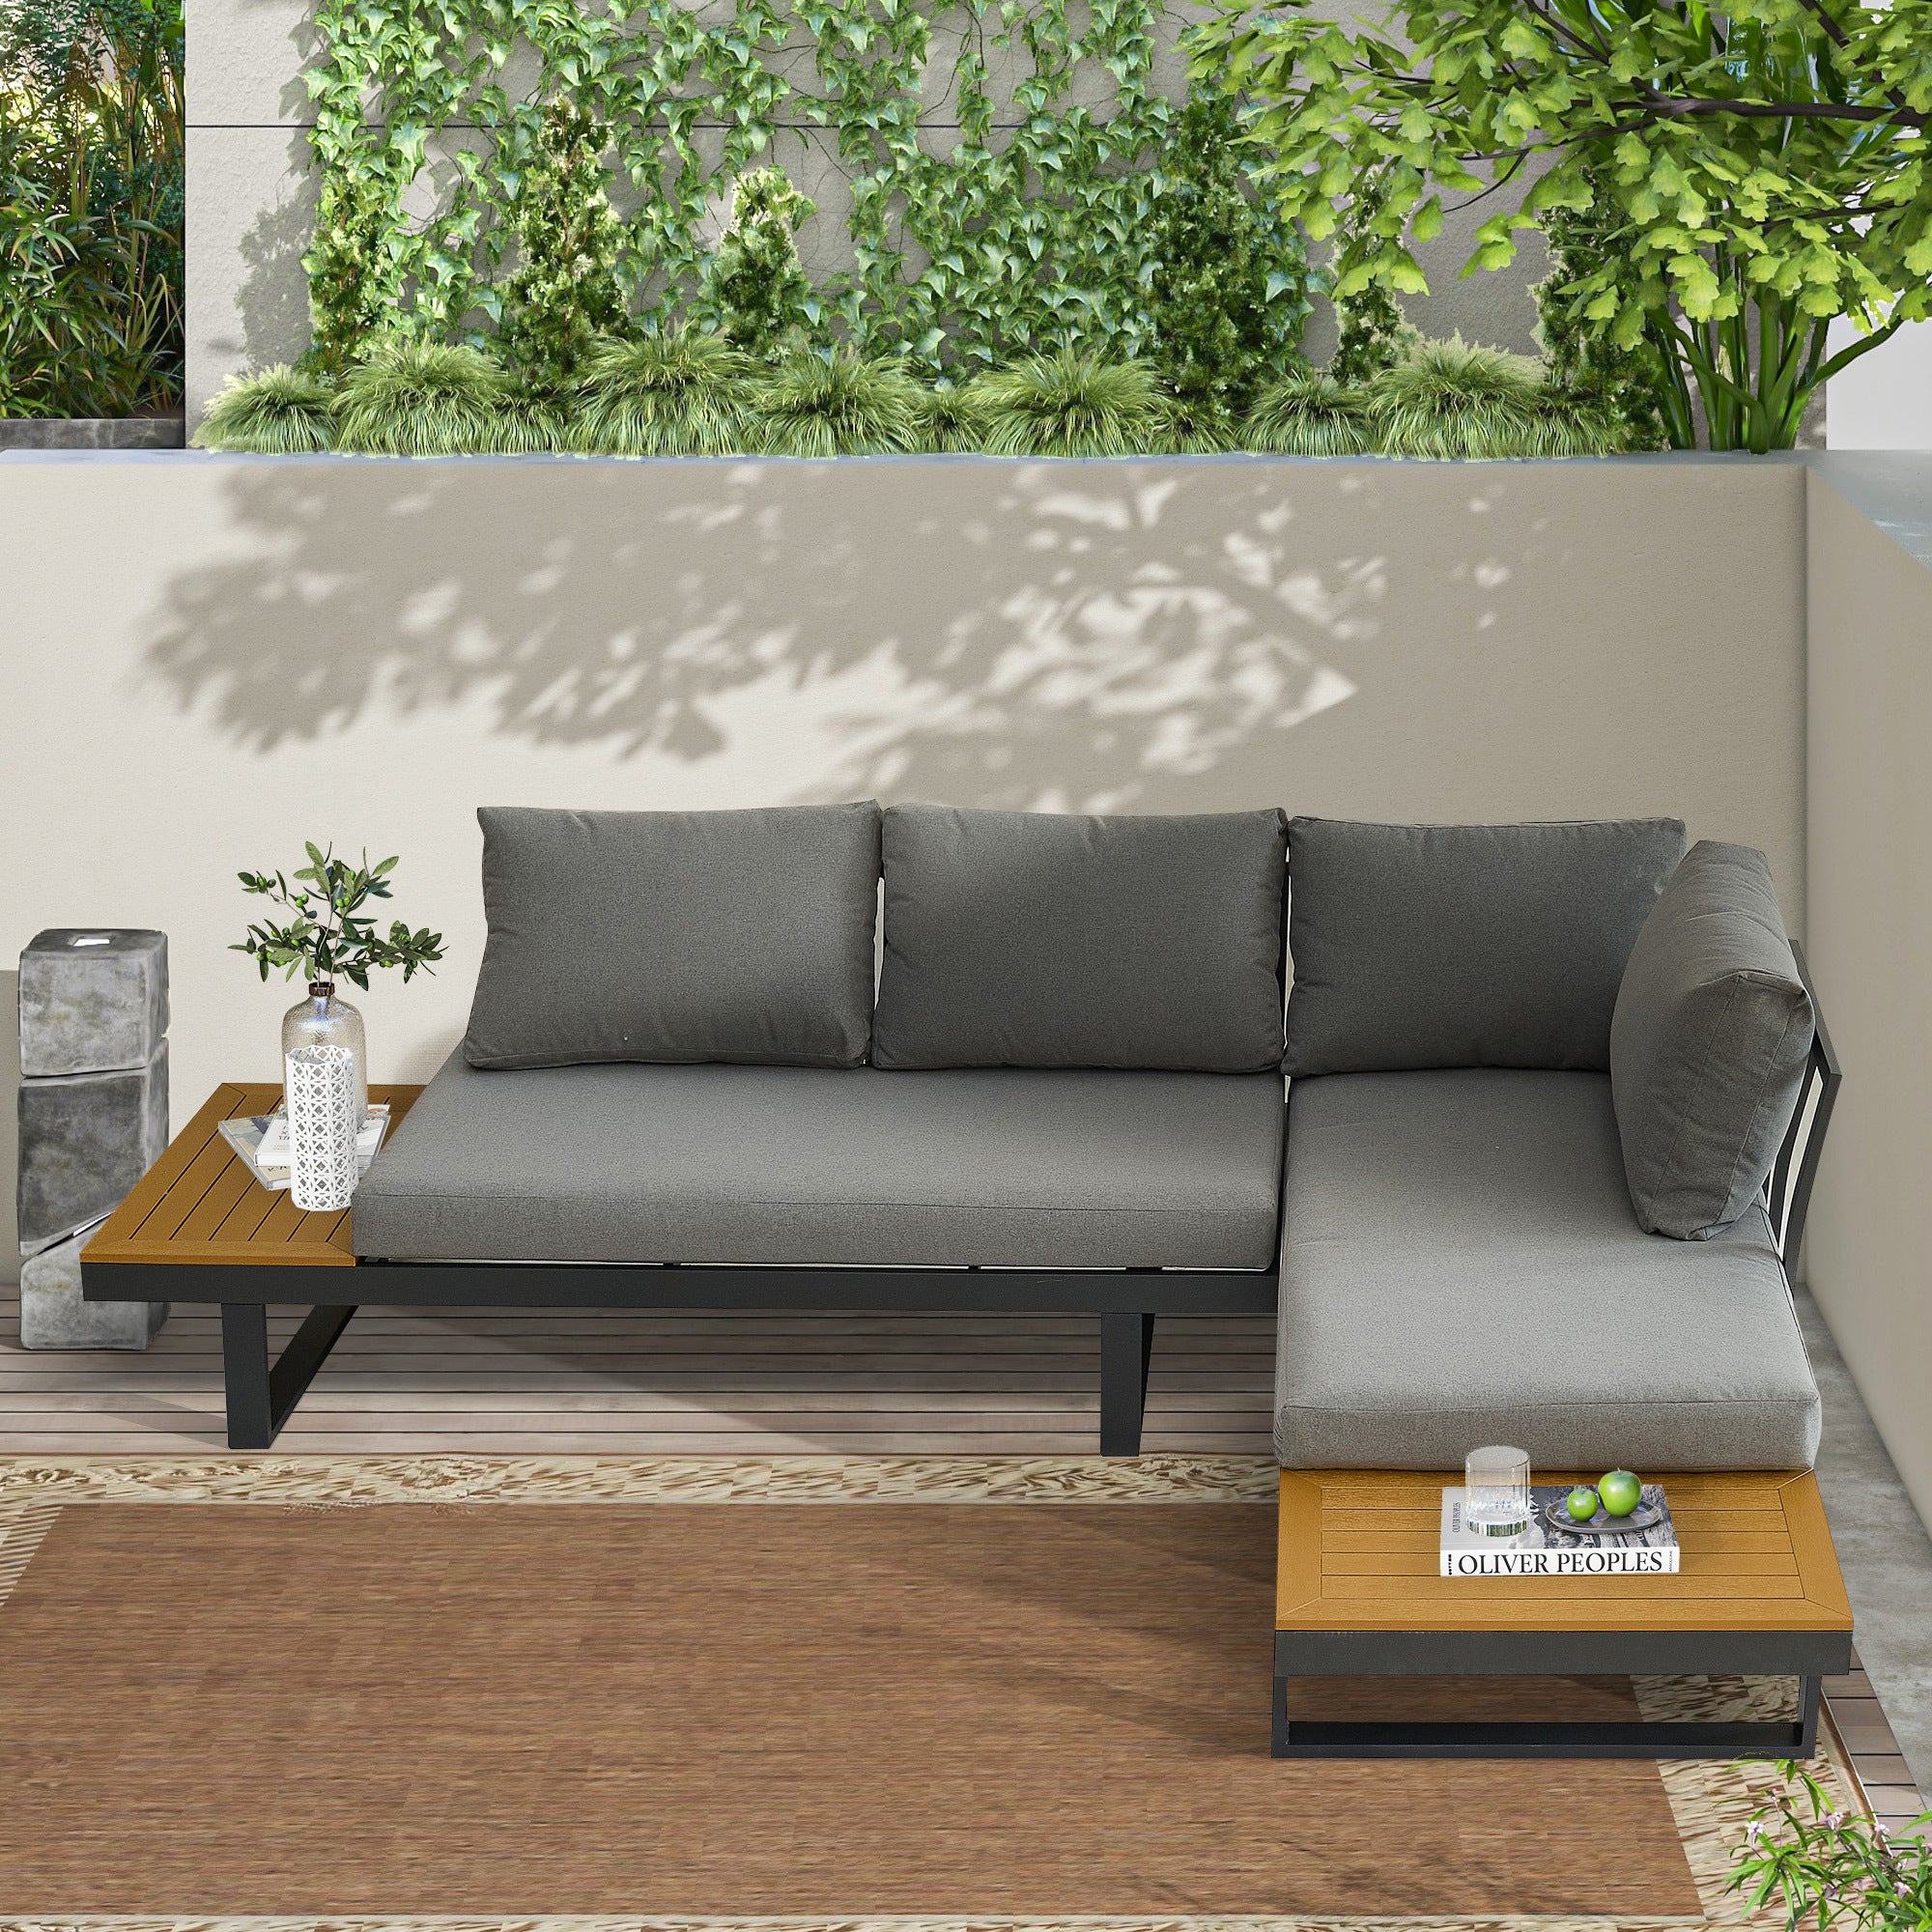 Aluminum Patio Furniture Set, Outdoor L Shaped